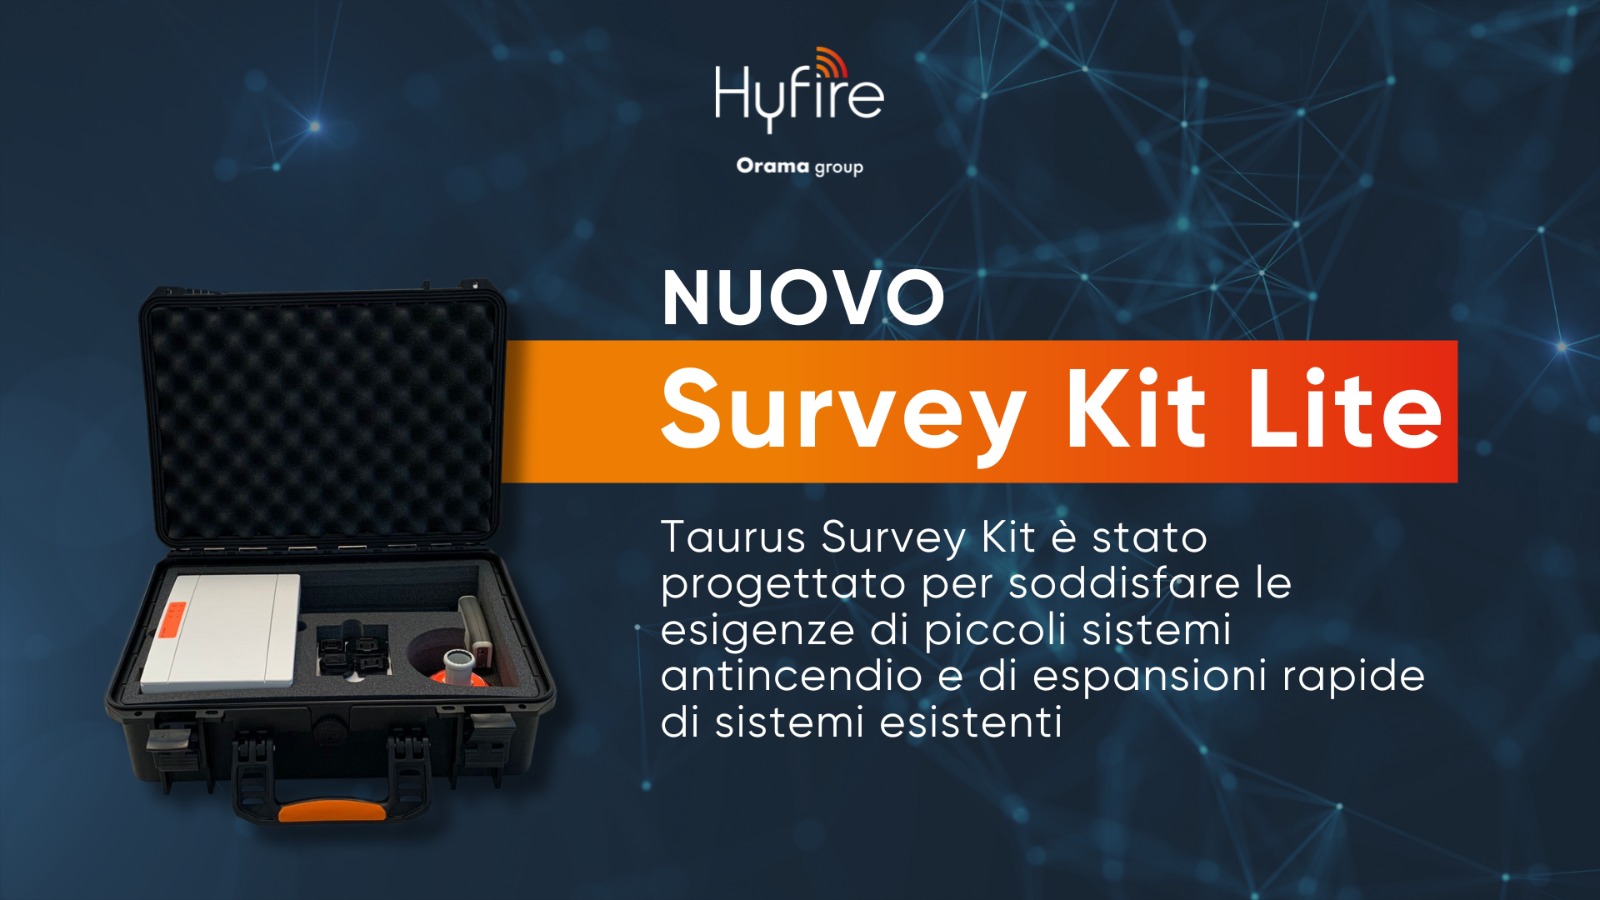 Hyfire lancia il “Taurus Survey Kit Lite”, lo strumento rivoluzionario per i piccoli sistemi antincendio